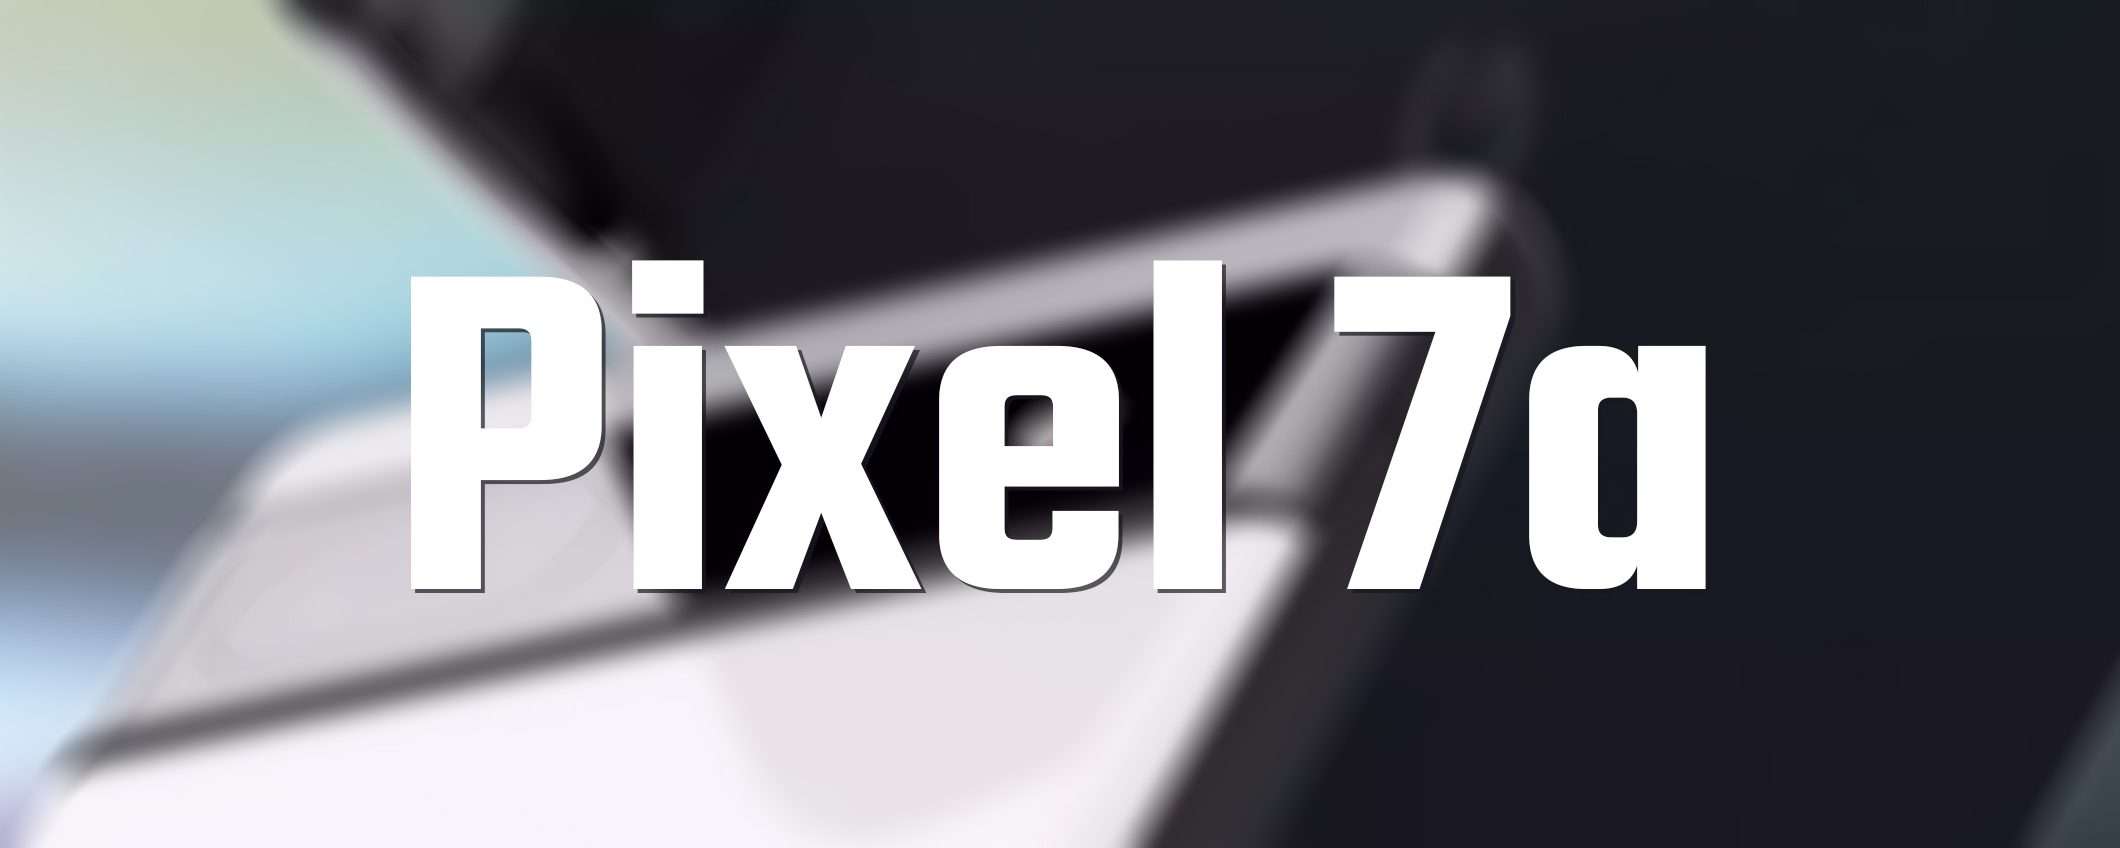 Pixel 7a somiglierà molto a Pixel 6a: il render